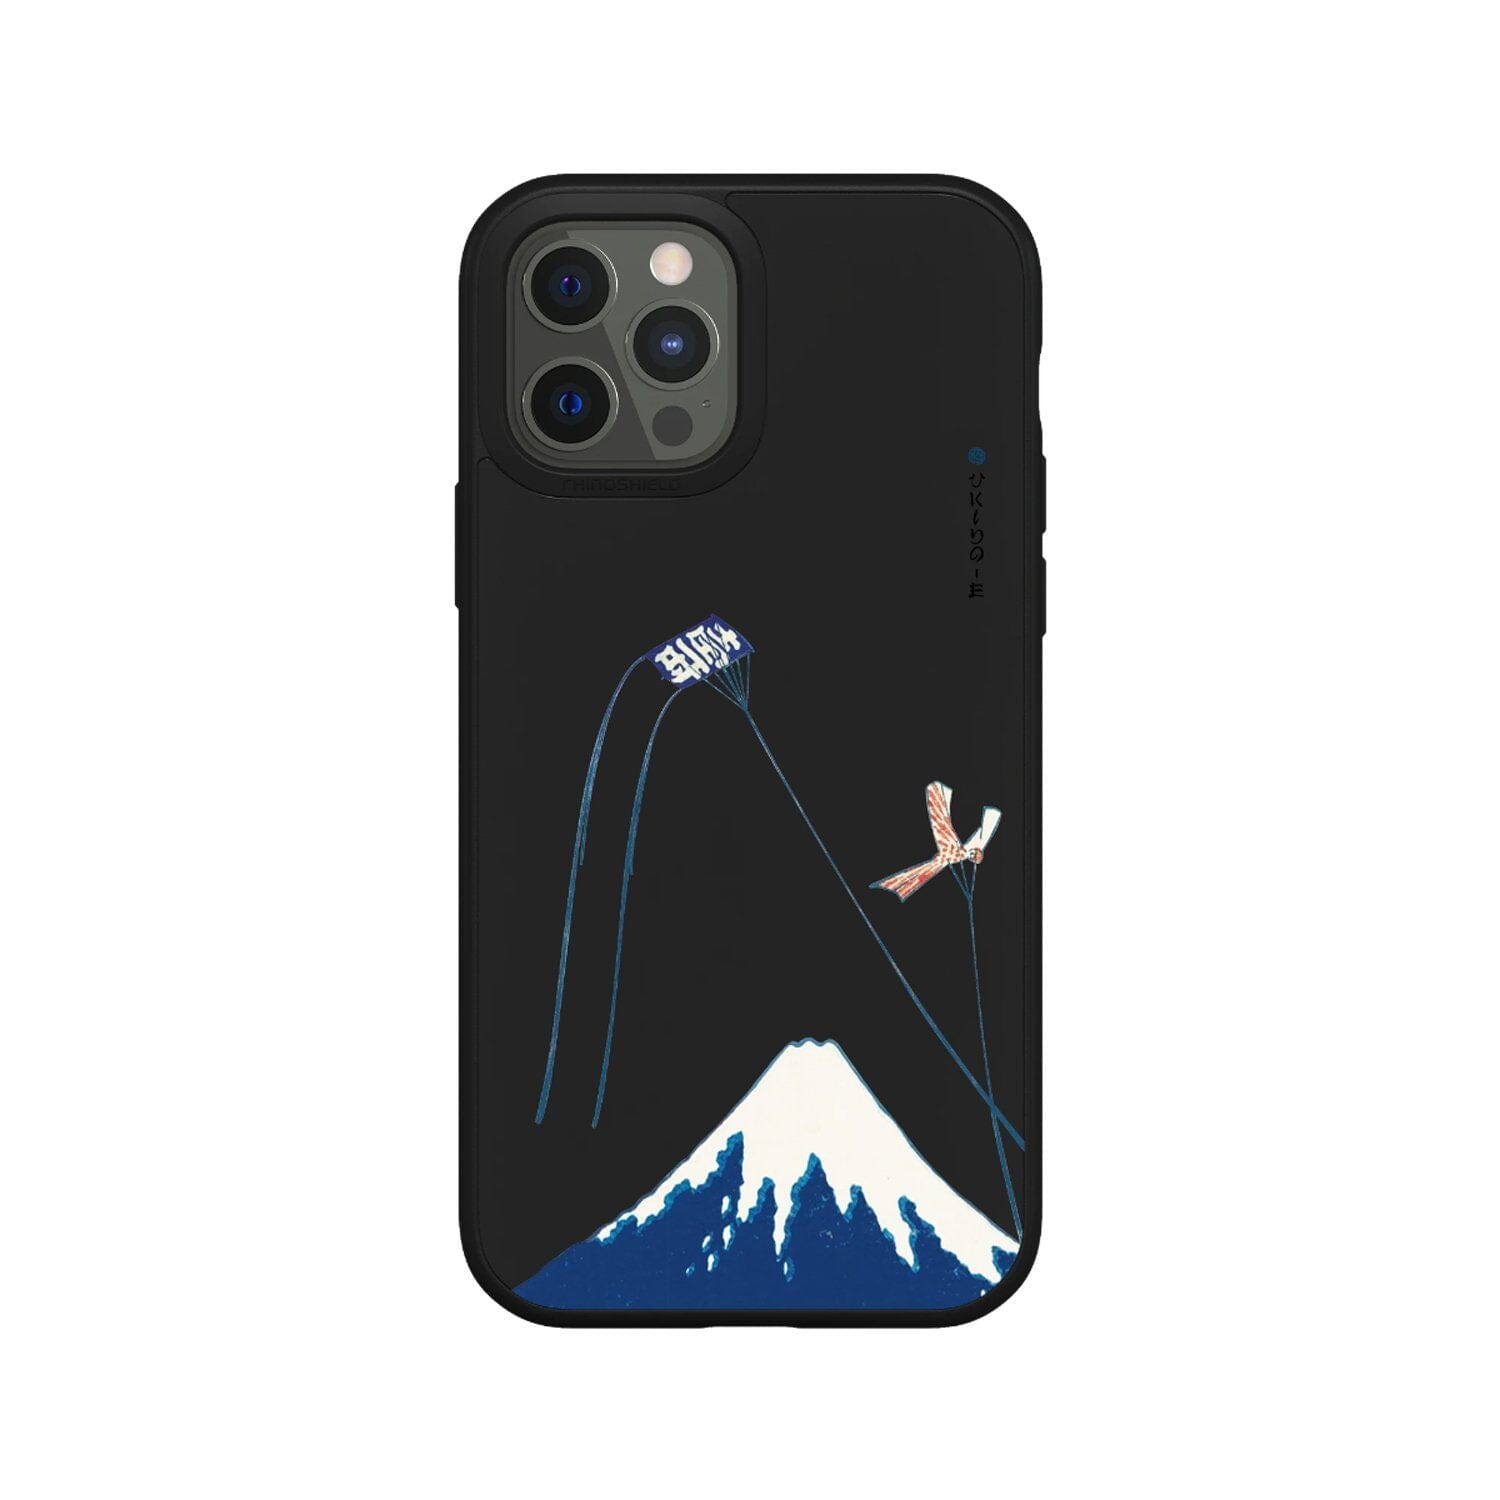 RhinoShield SolidSuit Design Case for iPhone 12 Series (2020) Default RhinoShield iPhone 12 Pro Max 6.7" Black/Mount Fuji 